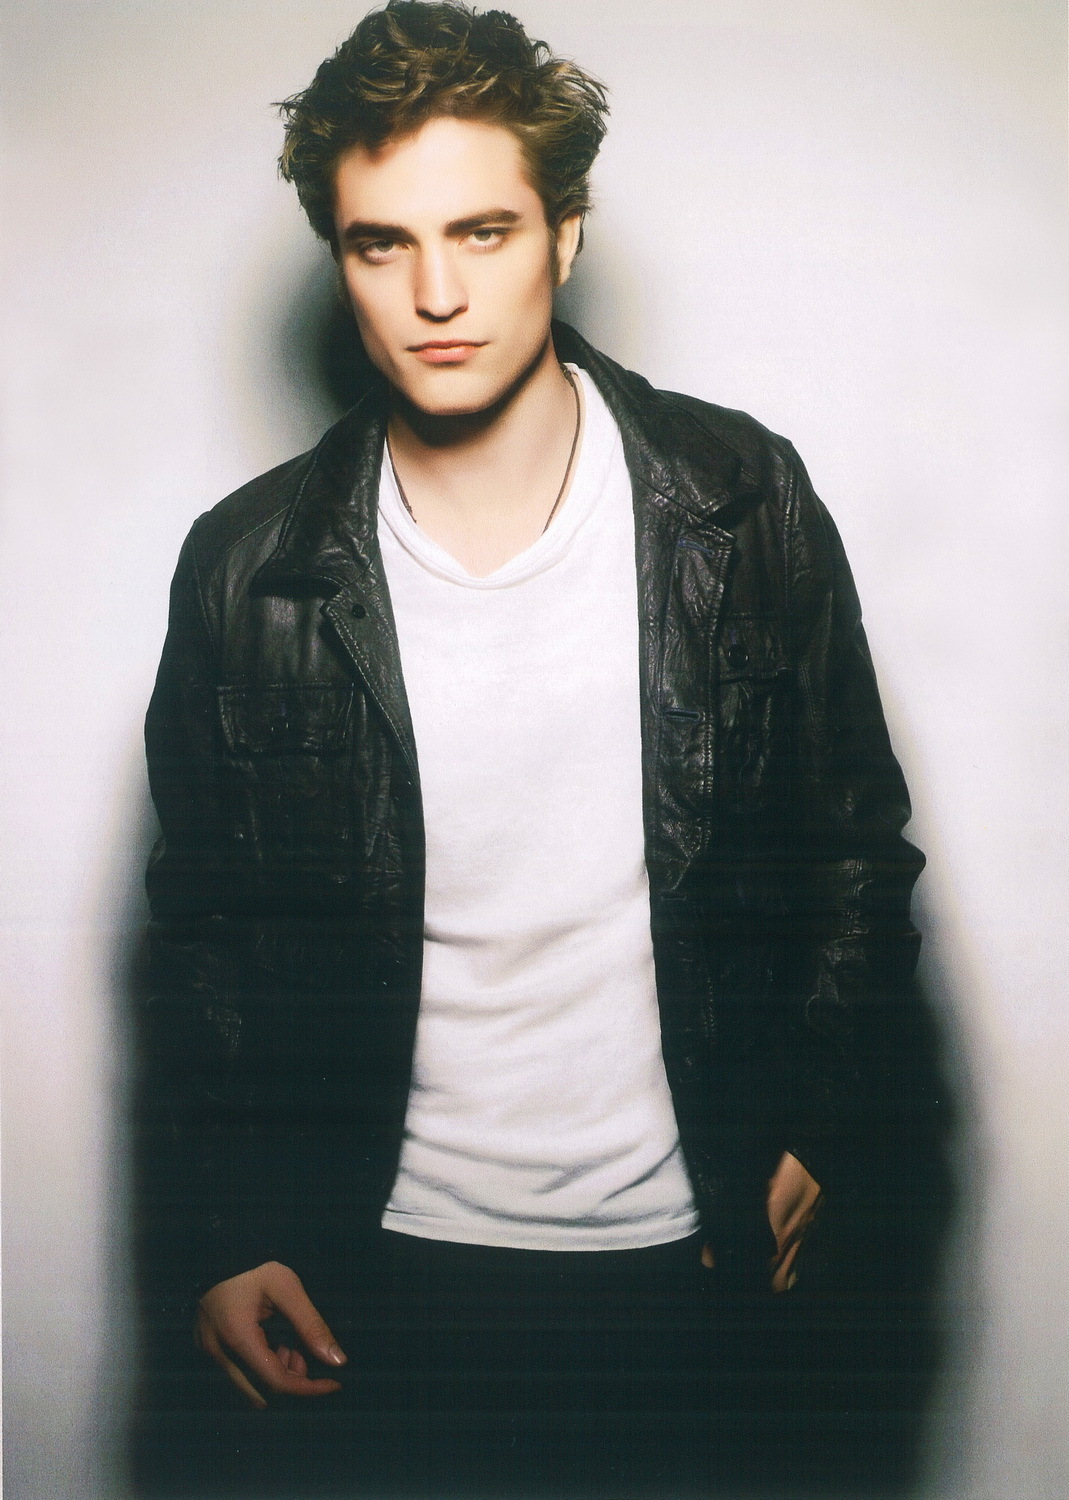 Rober Pattinson - Robert Pattinson Photo (8633178) - Fanpop1069 x 1500